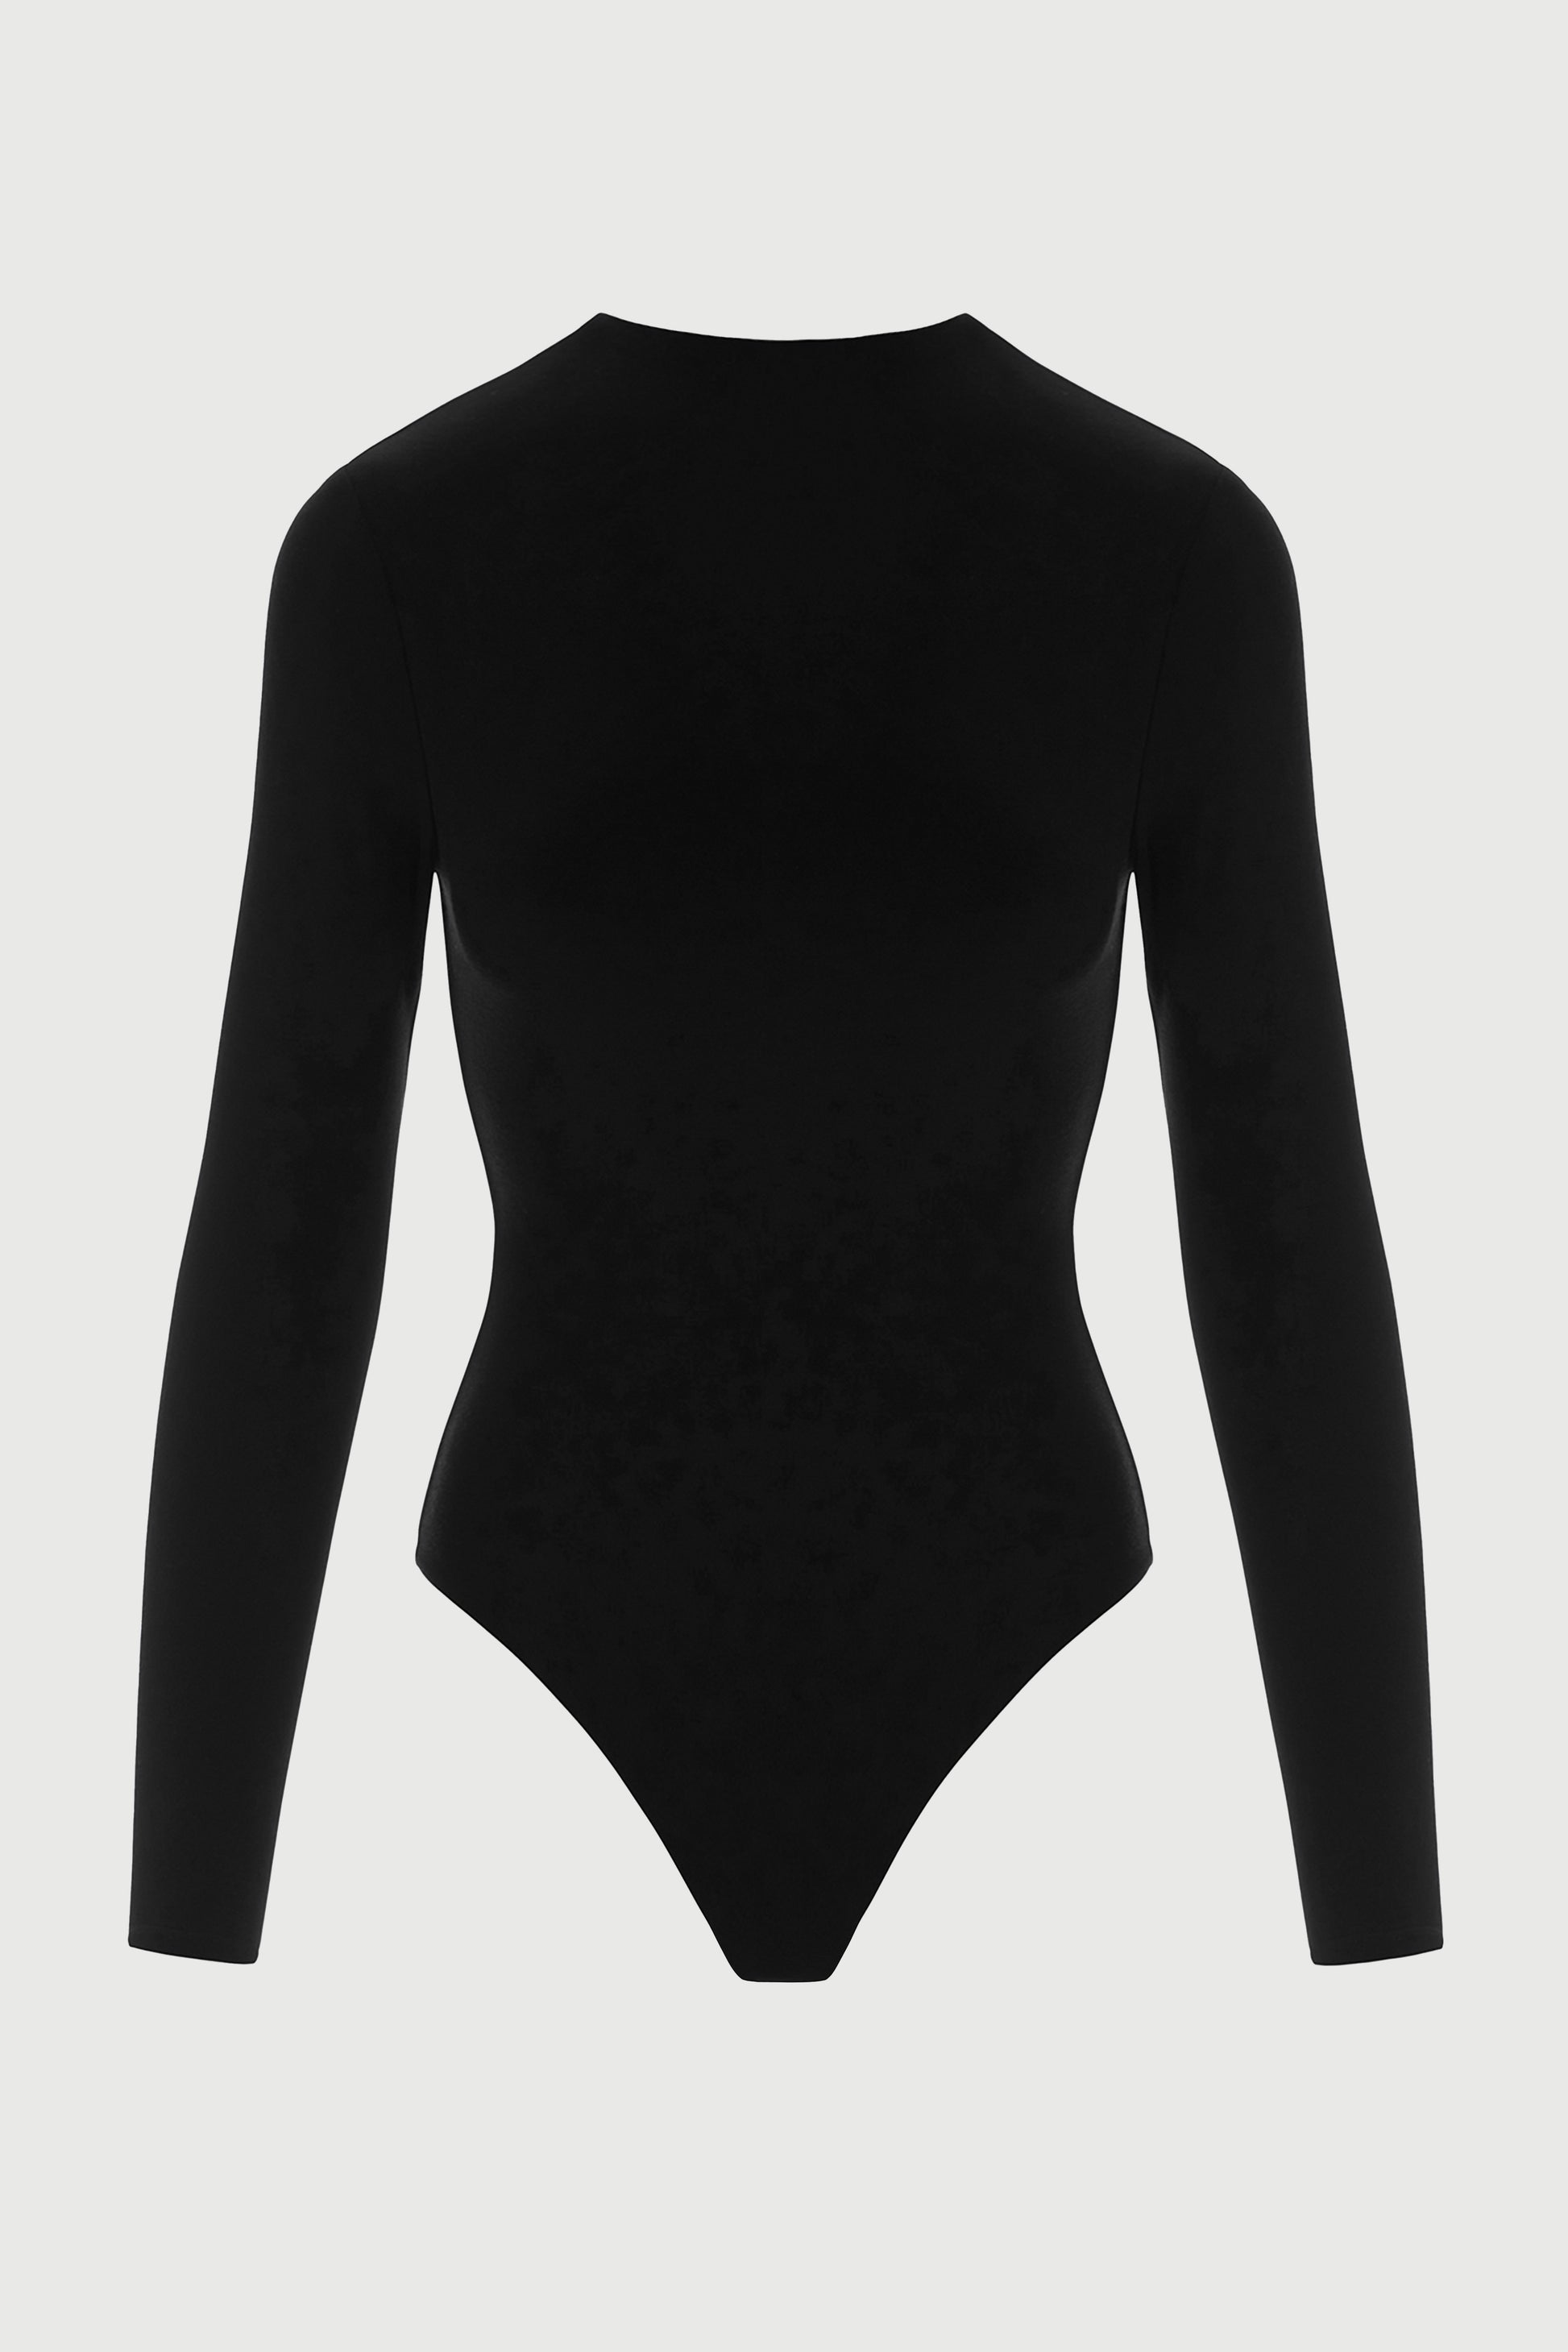 NWT Naked Wardrobe deep V bodysuit, Size Large, Color